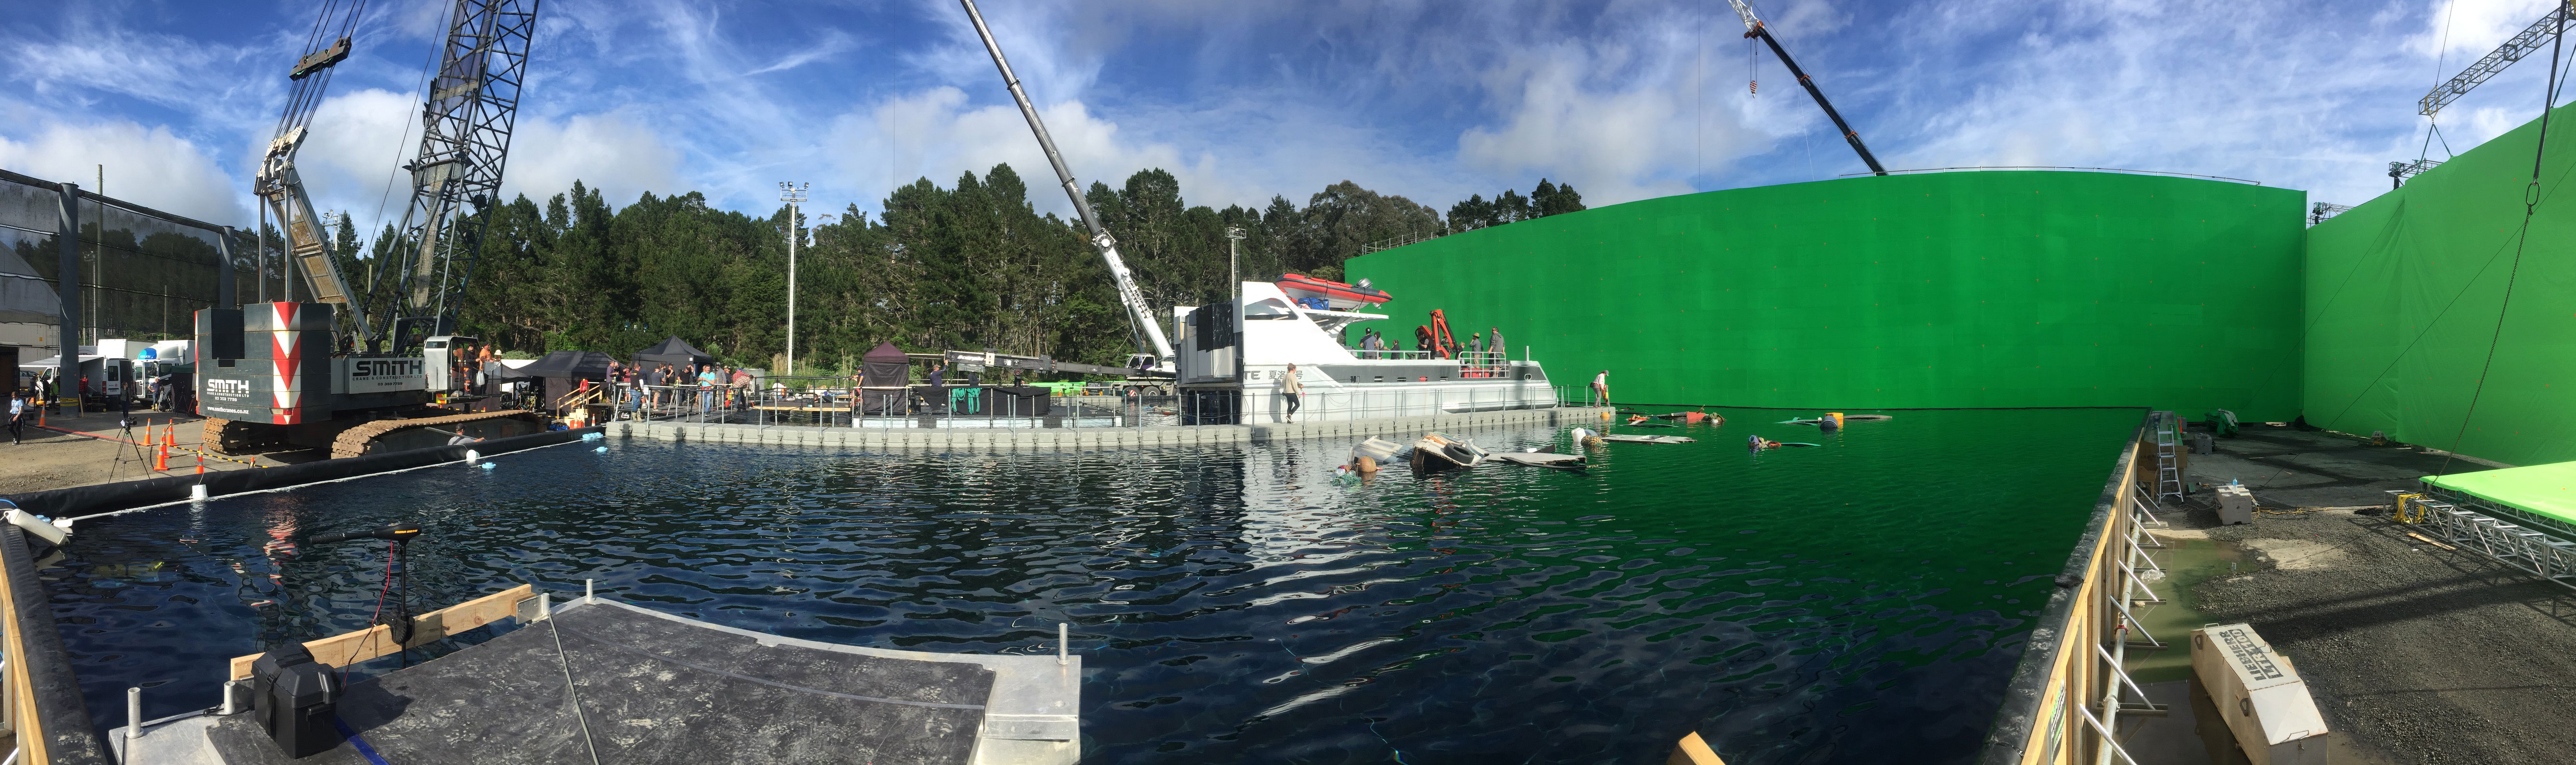 Kumeu Film Studios outdoor water tank.